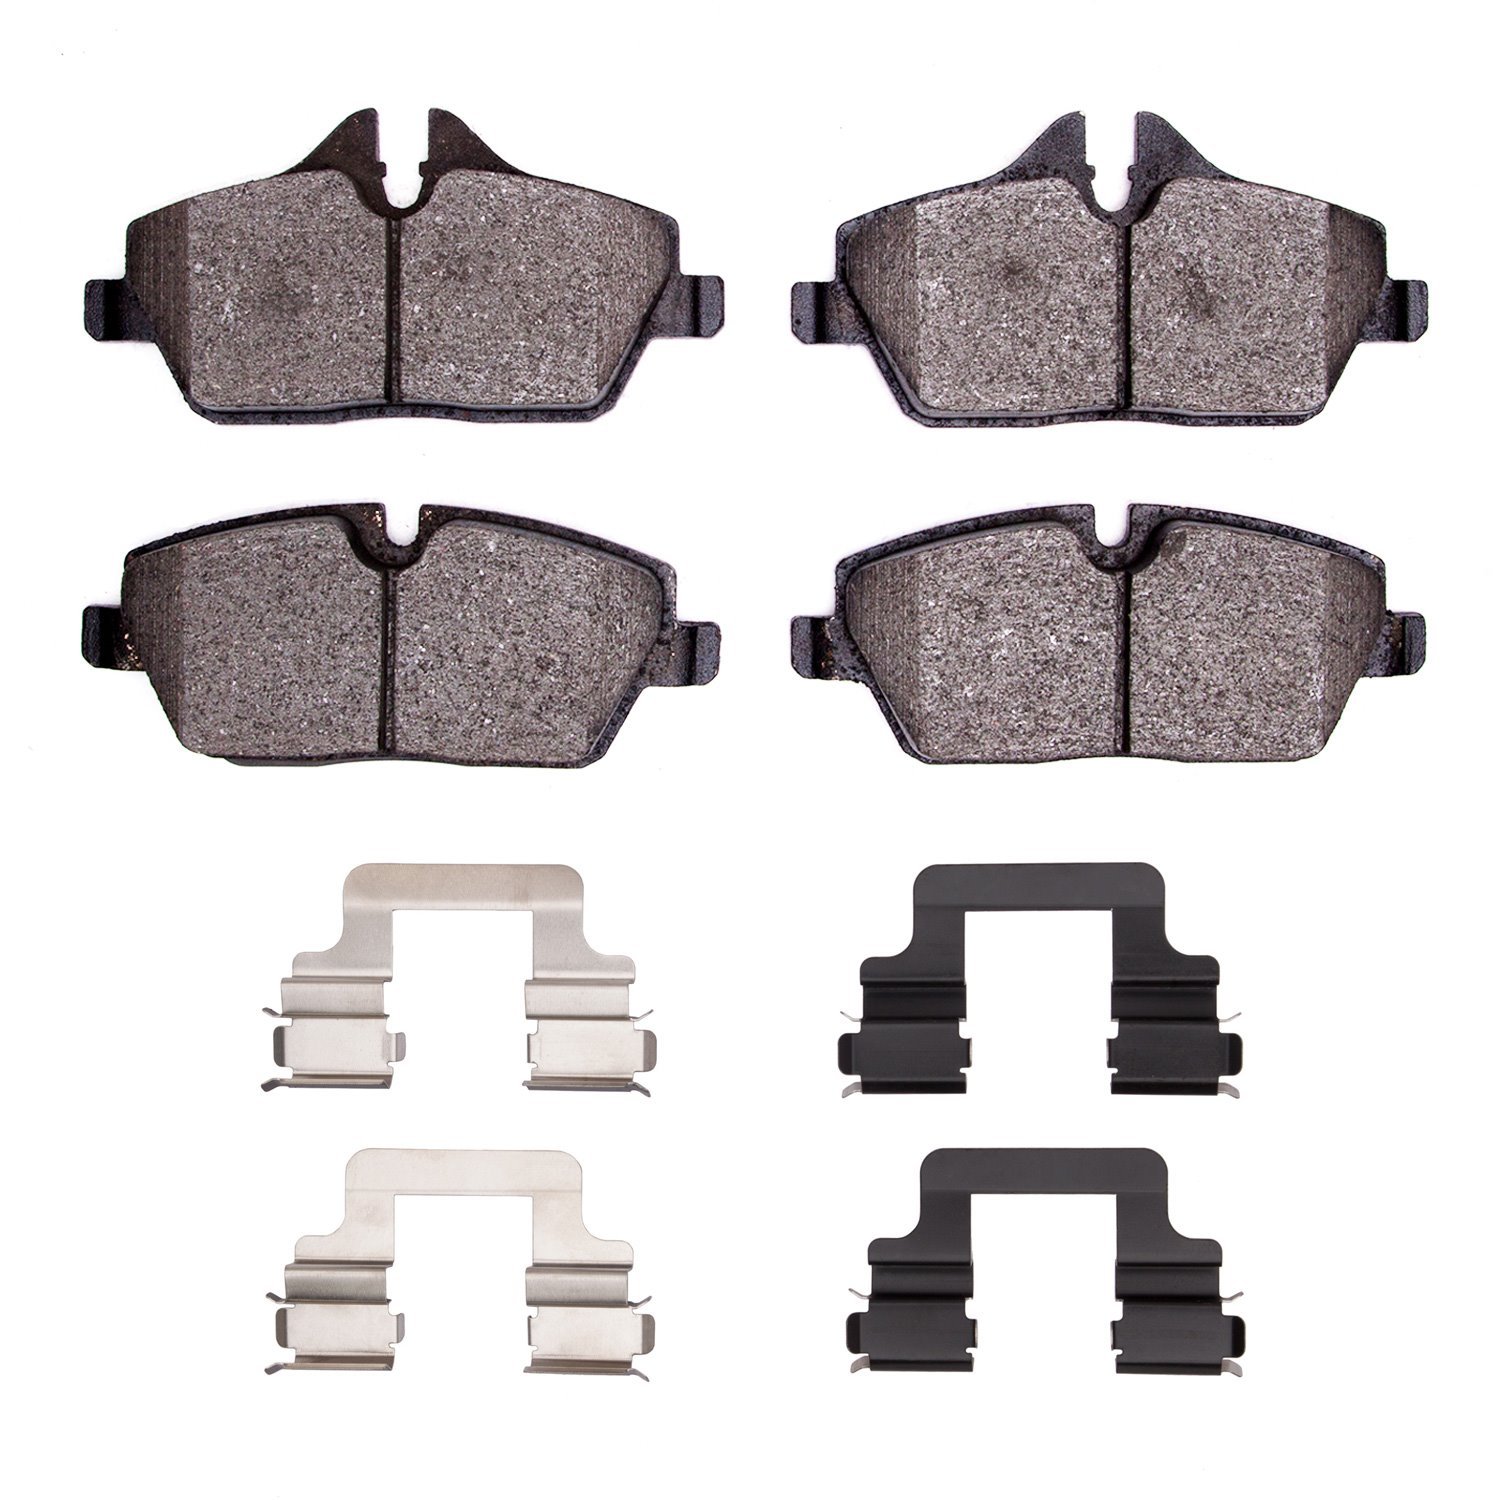 1310-1308-01 3000-Series Ceramic Brake Pads & Hardware Kit, Fits Select Multiple Makes/Models, Position: Front